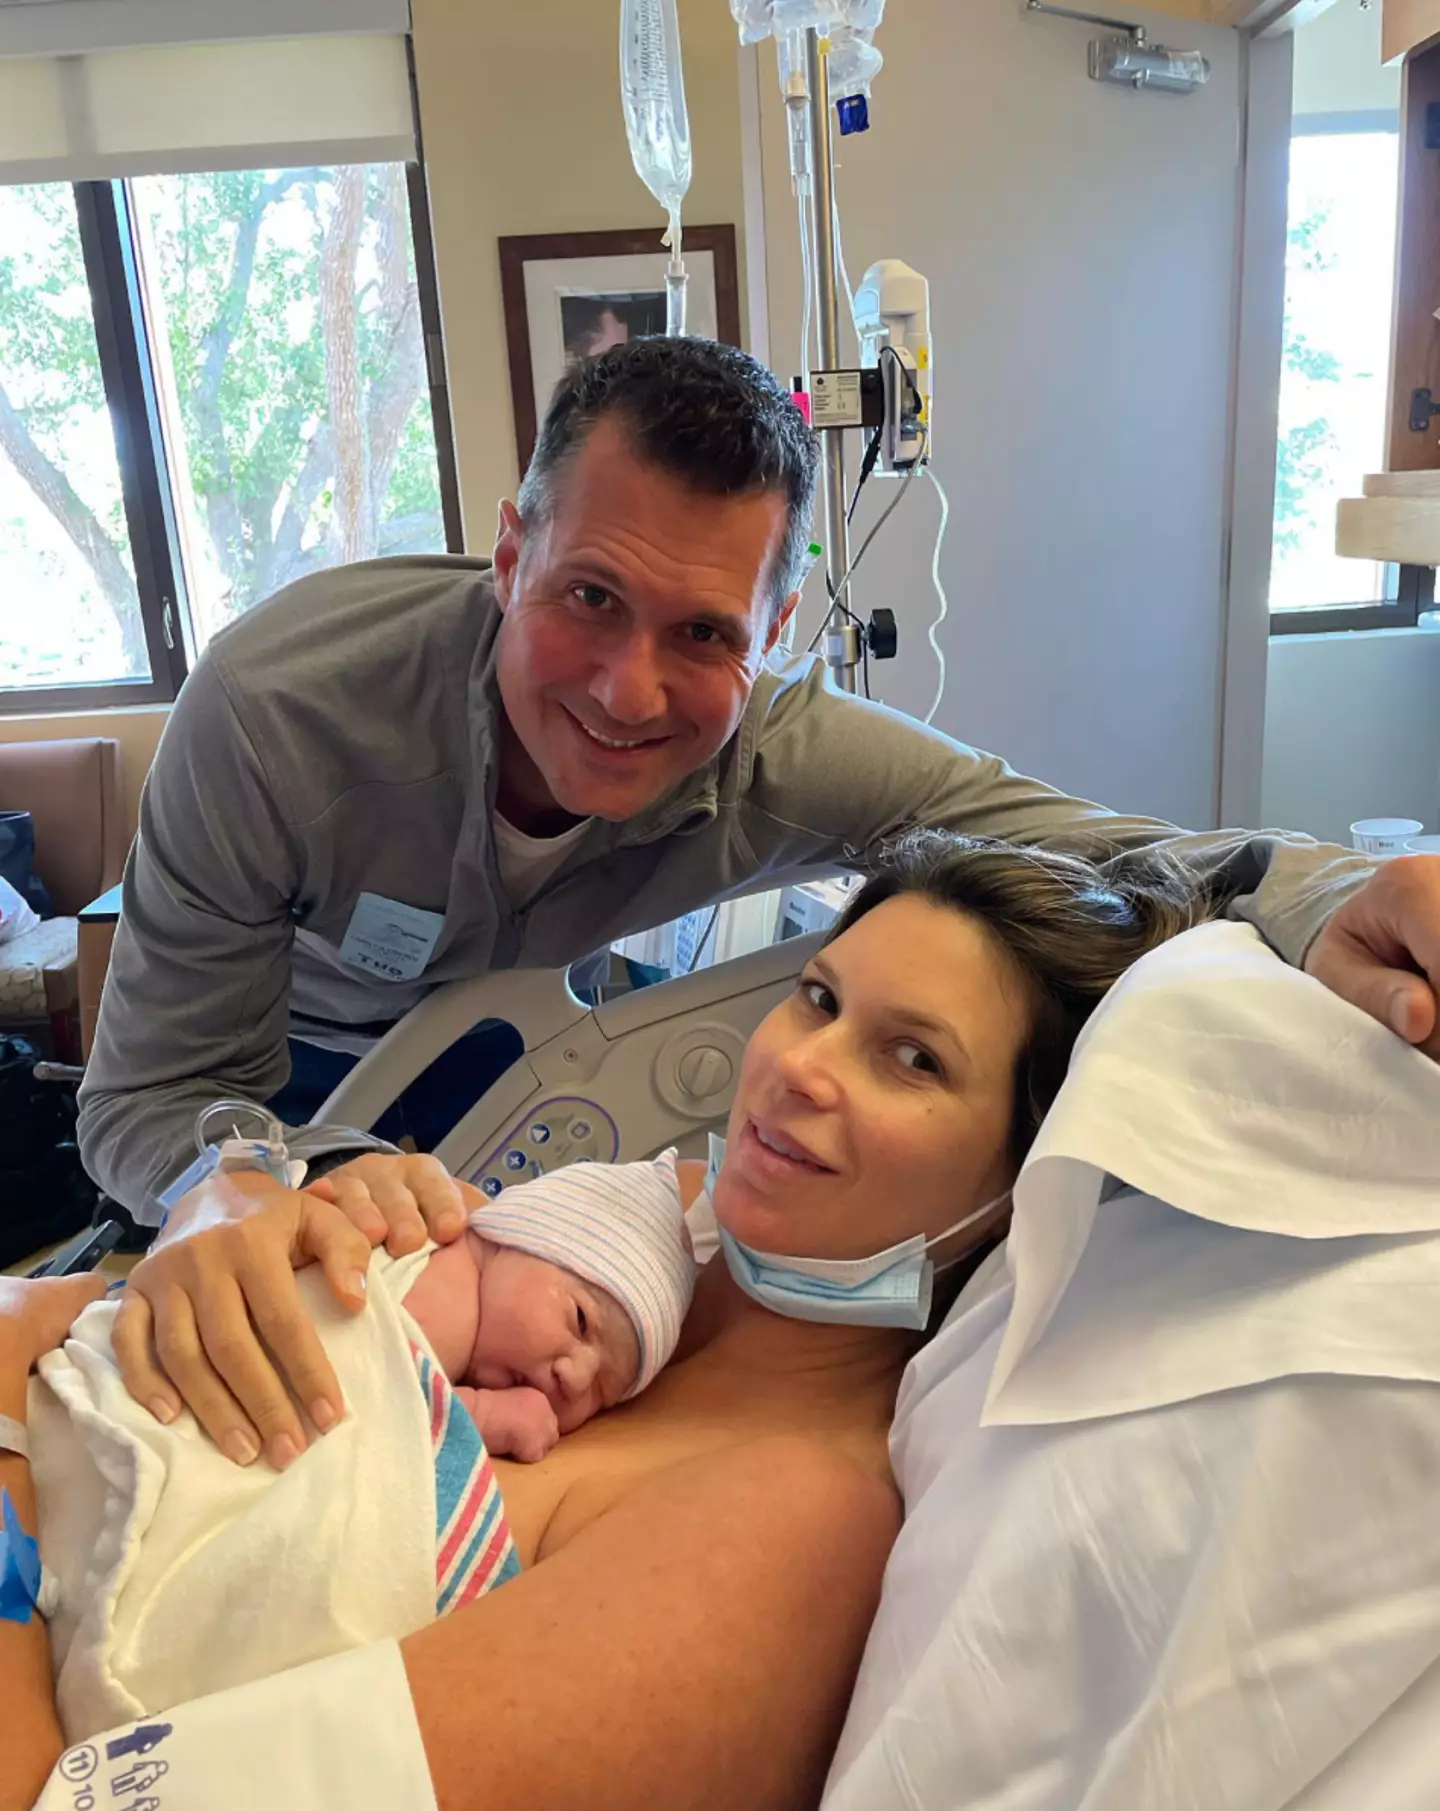 Maya Vander has welcomed a baby girl.